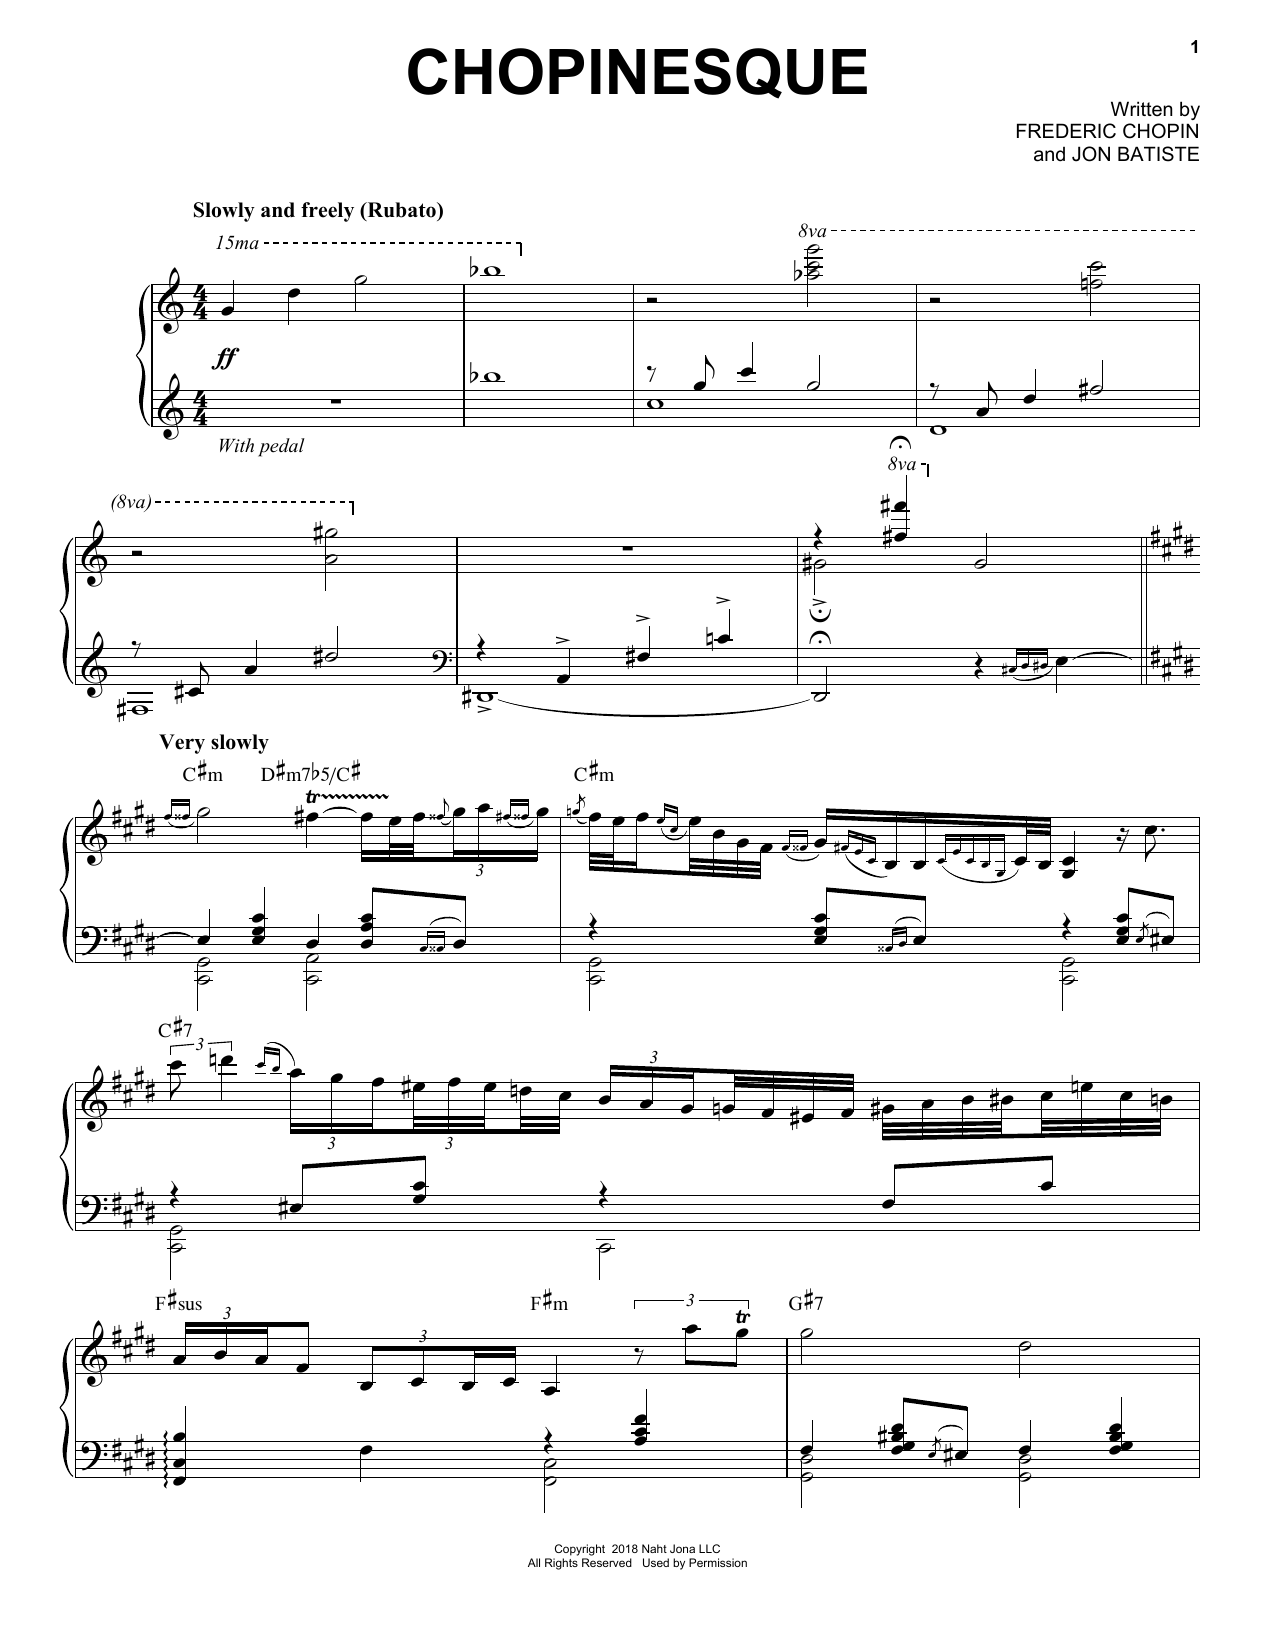 Jon Batiste quot Chopinesque quot Sheet Music Notes Download Printable PDF